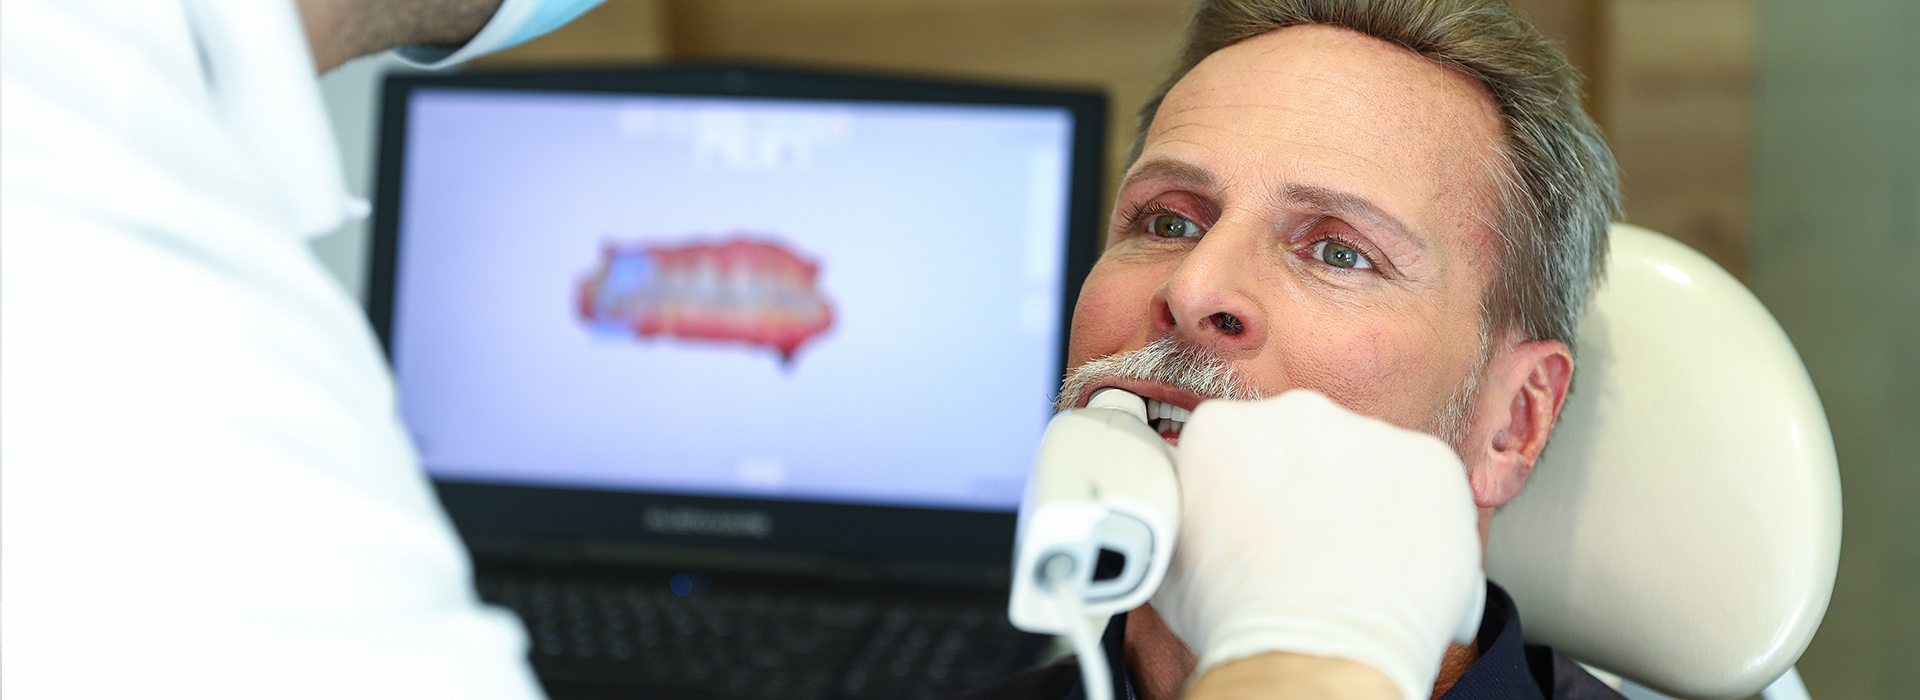 Divine Smiles Dental | Snoring Appliances, Digital Radiography and Dental Fillings